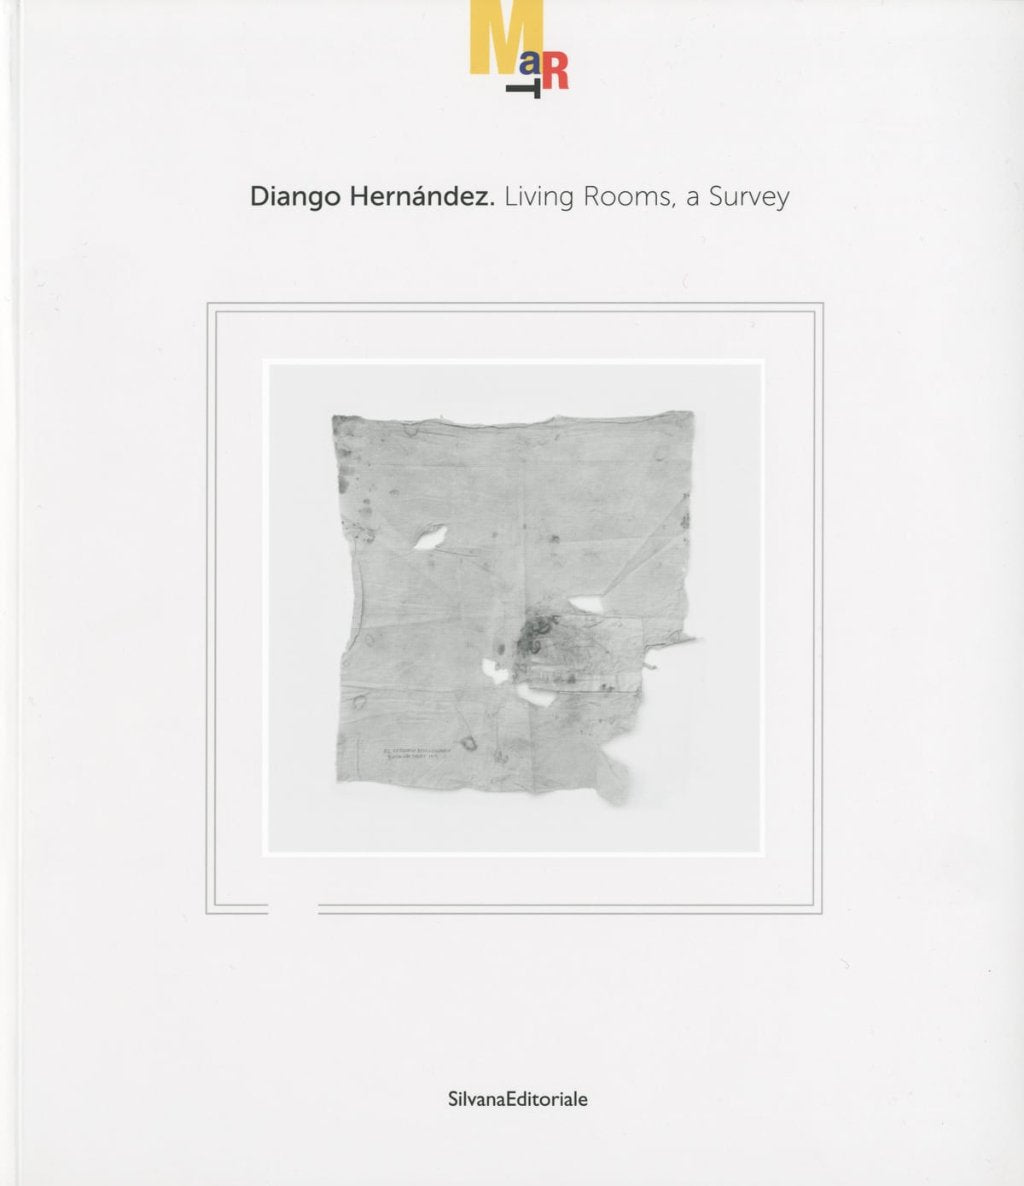 Diango Hernández. Living rooms, a survey - Diango Hernandez Studio